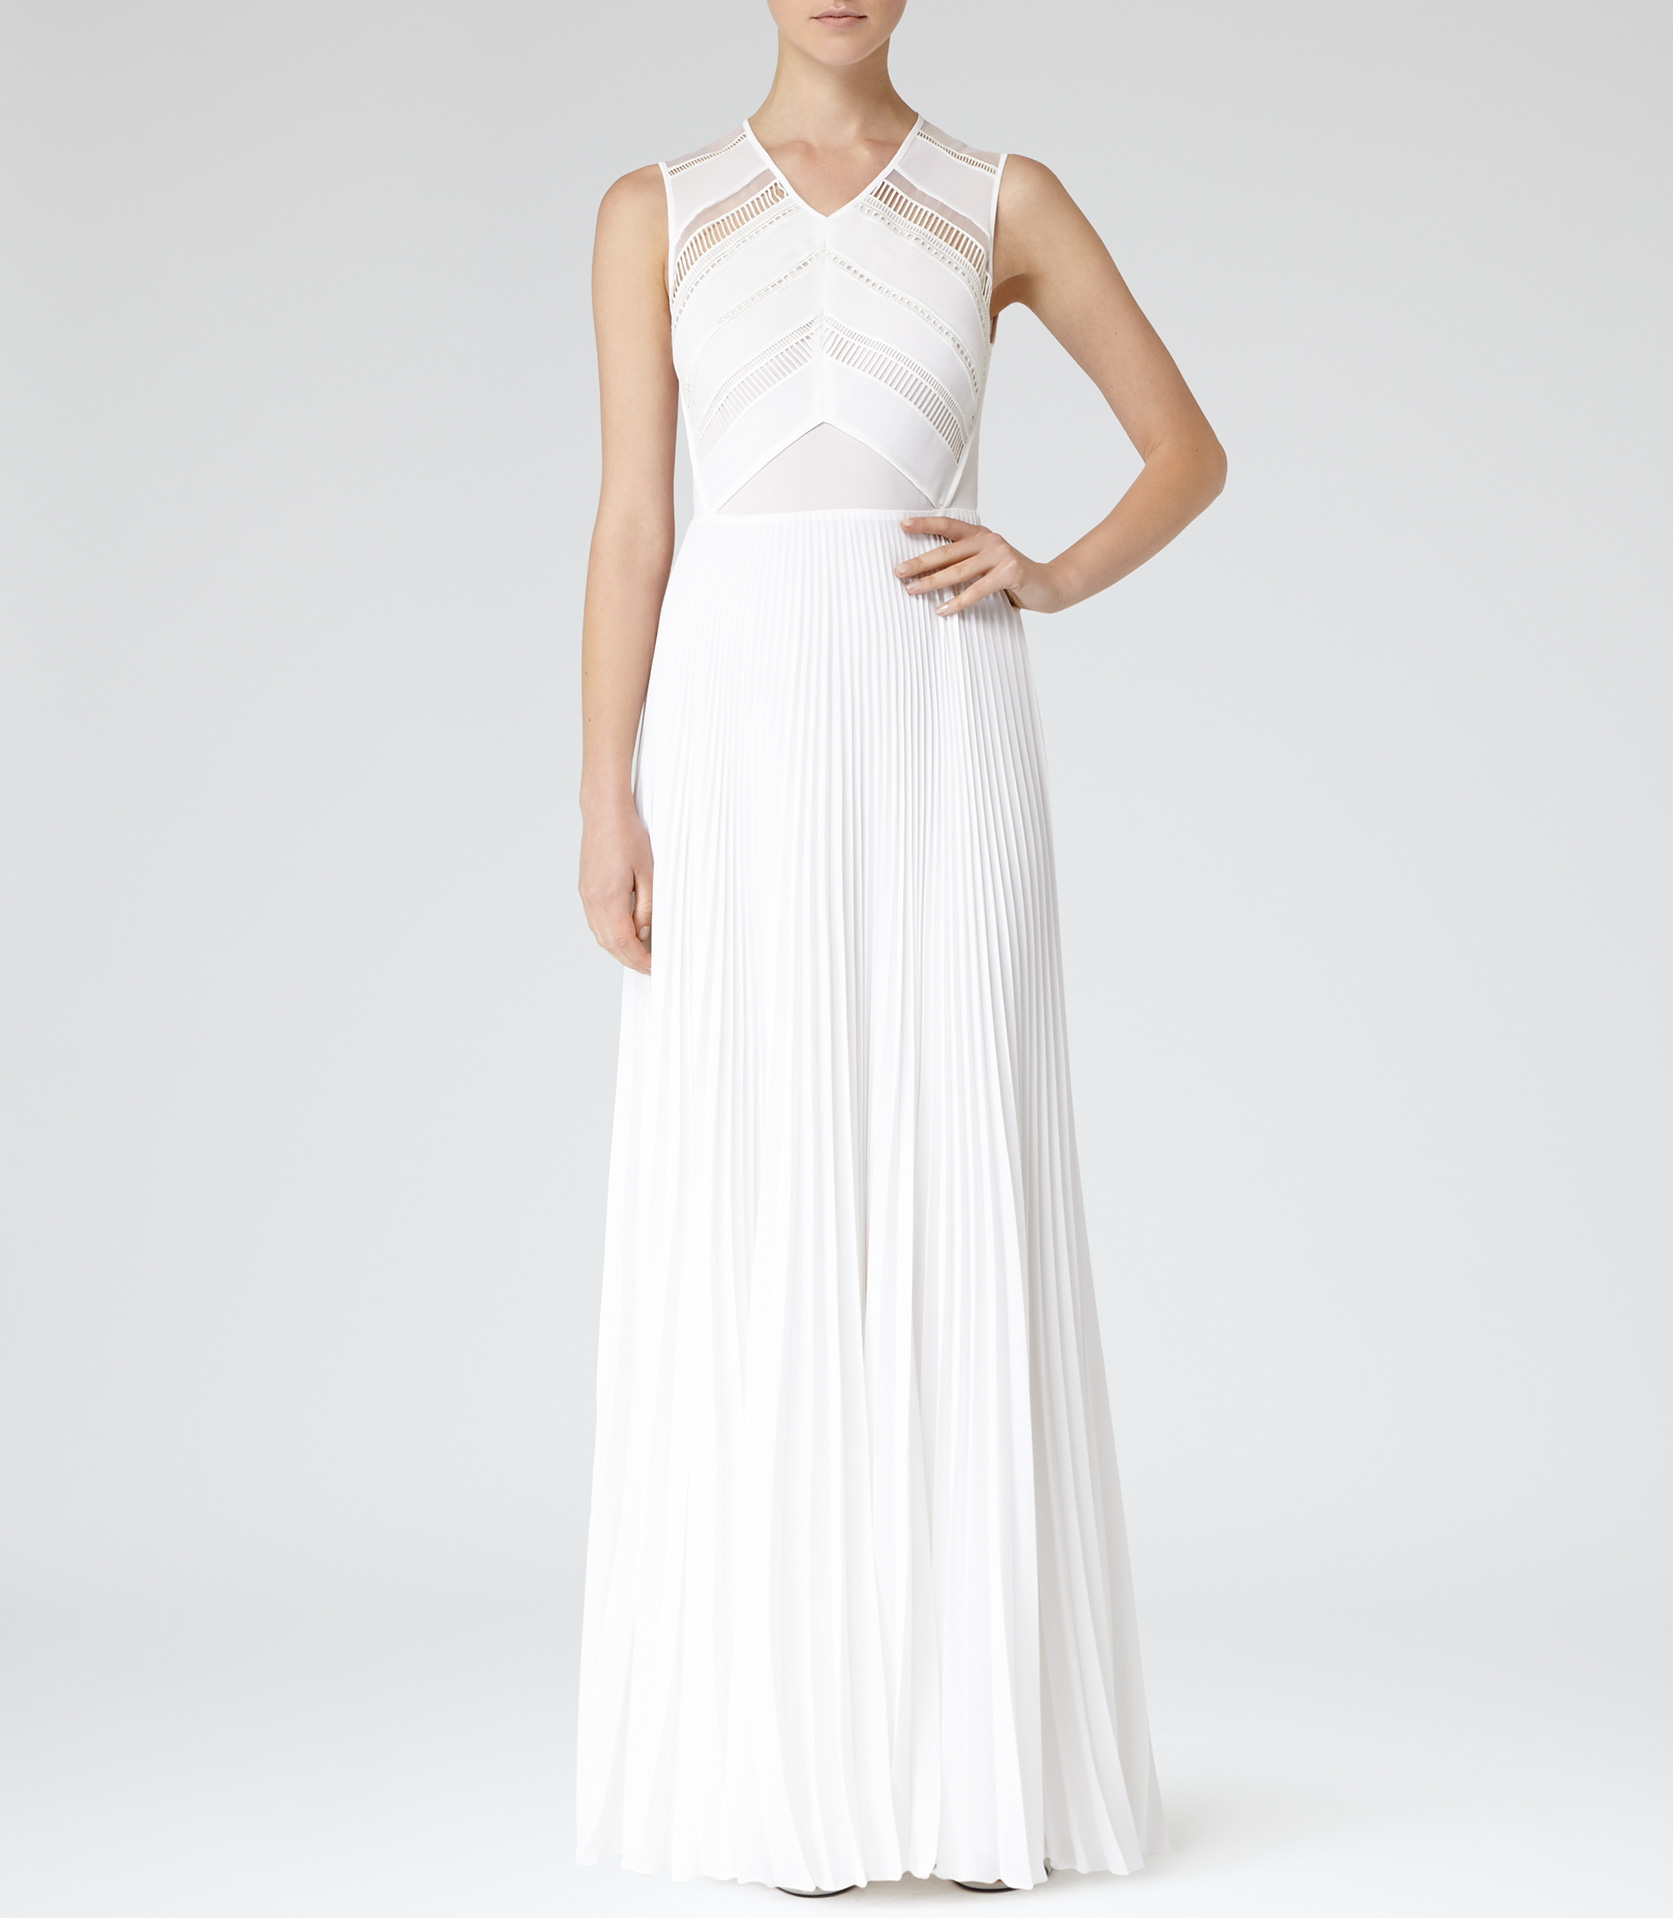 Lyst - Reiss Jemma Pleated Maxi Dress in White